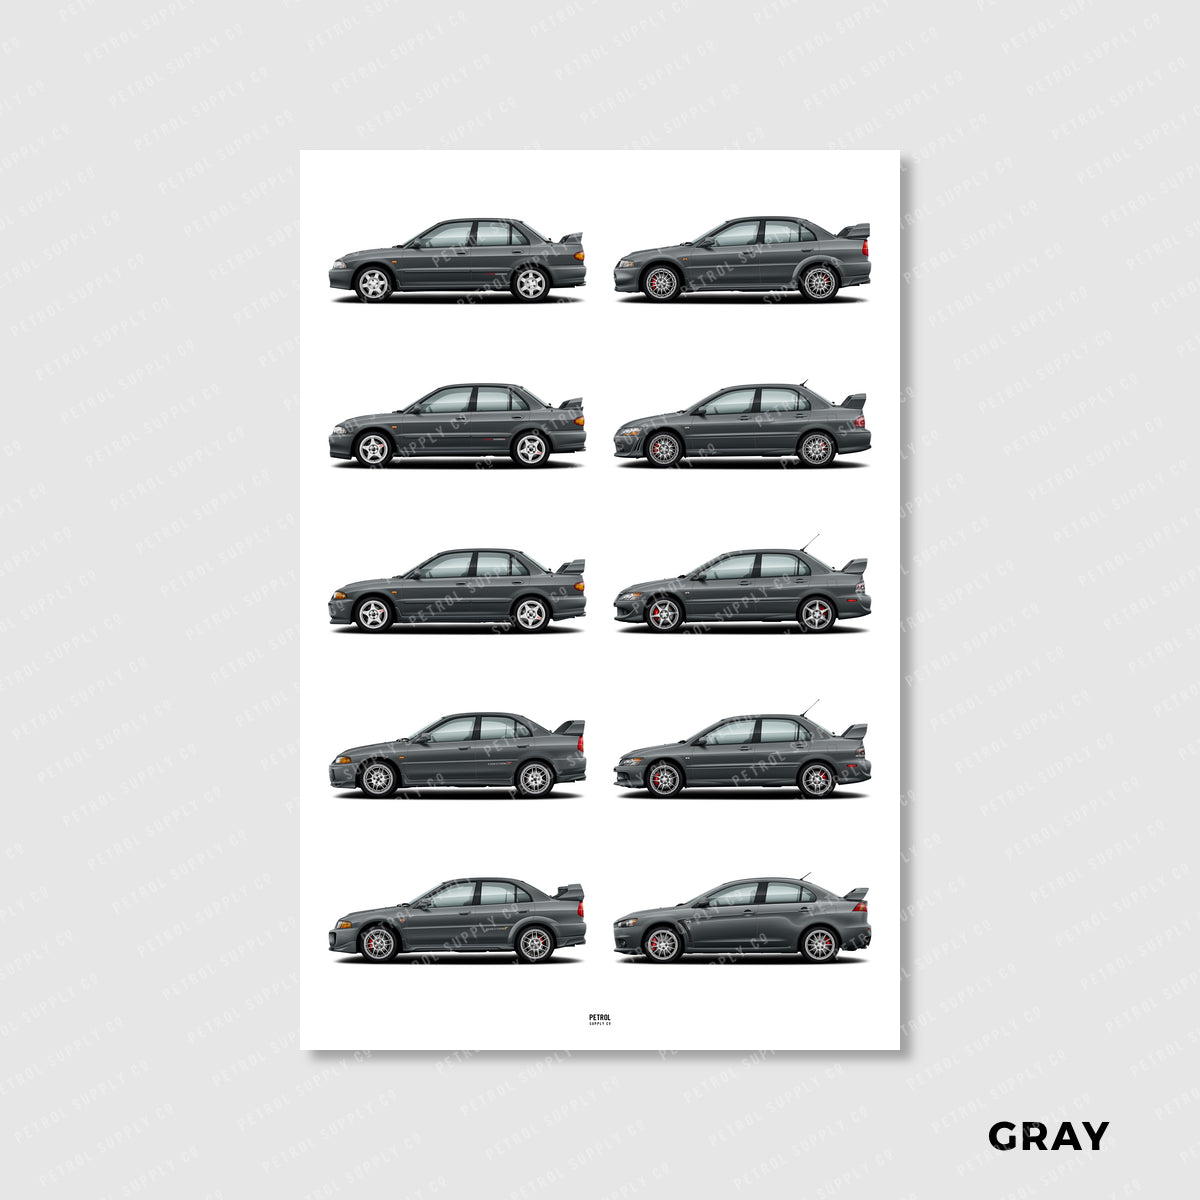 Mitsubishi Lancer Evo Poster Evolution Generations - gray